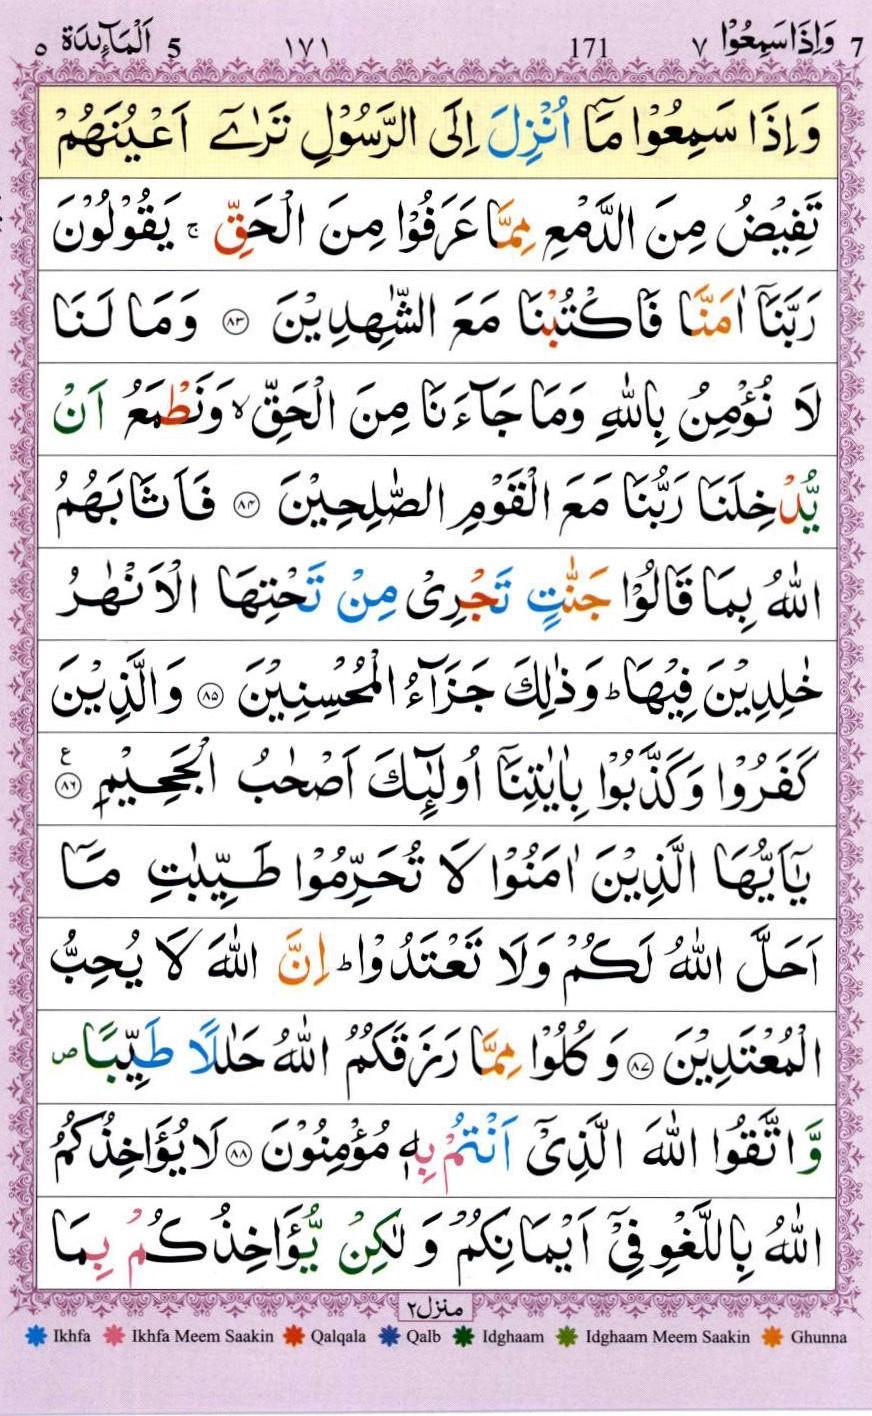 Surah Al Maidah in English